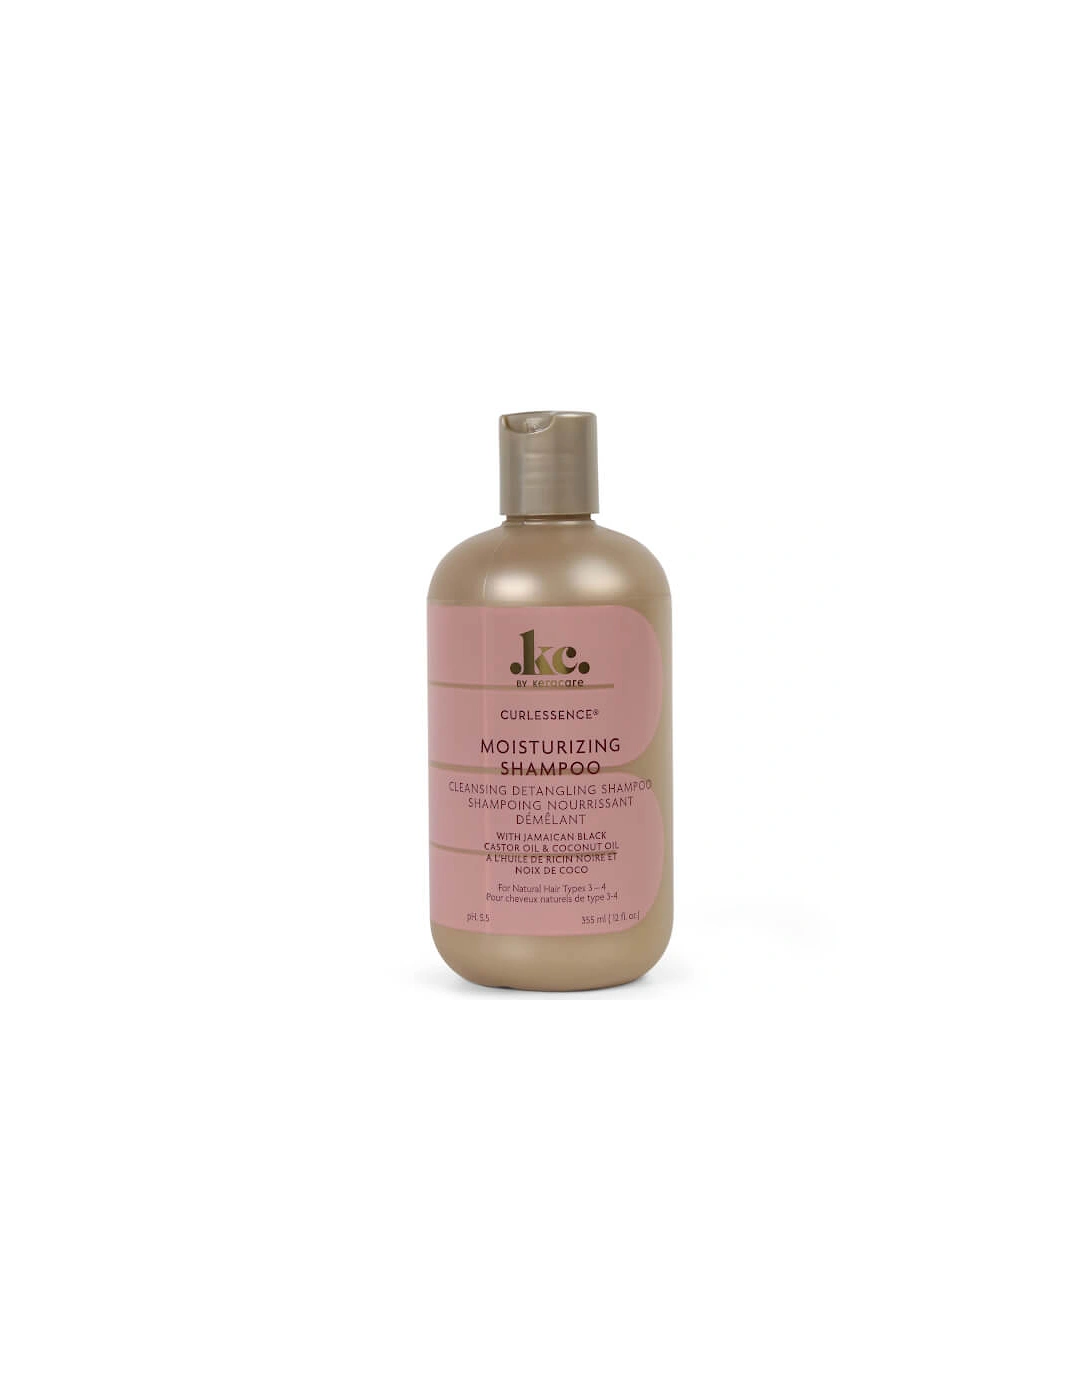 Curlessence Moisturizing Shampoo 350ml - KeraCare, 2 of 1